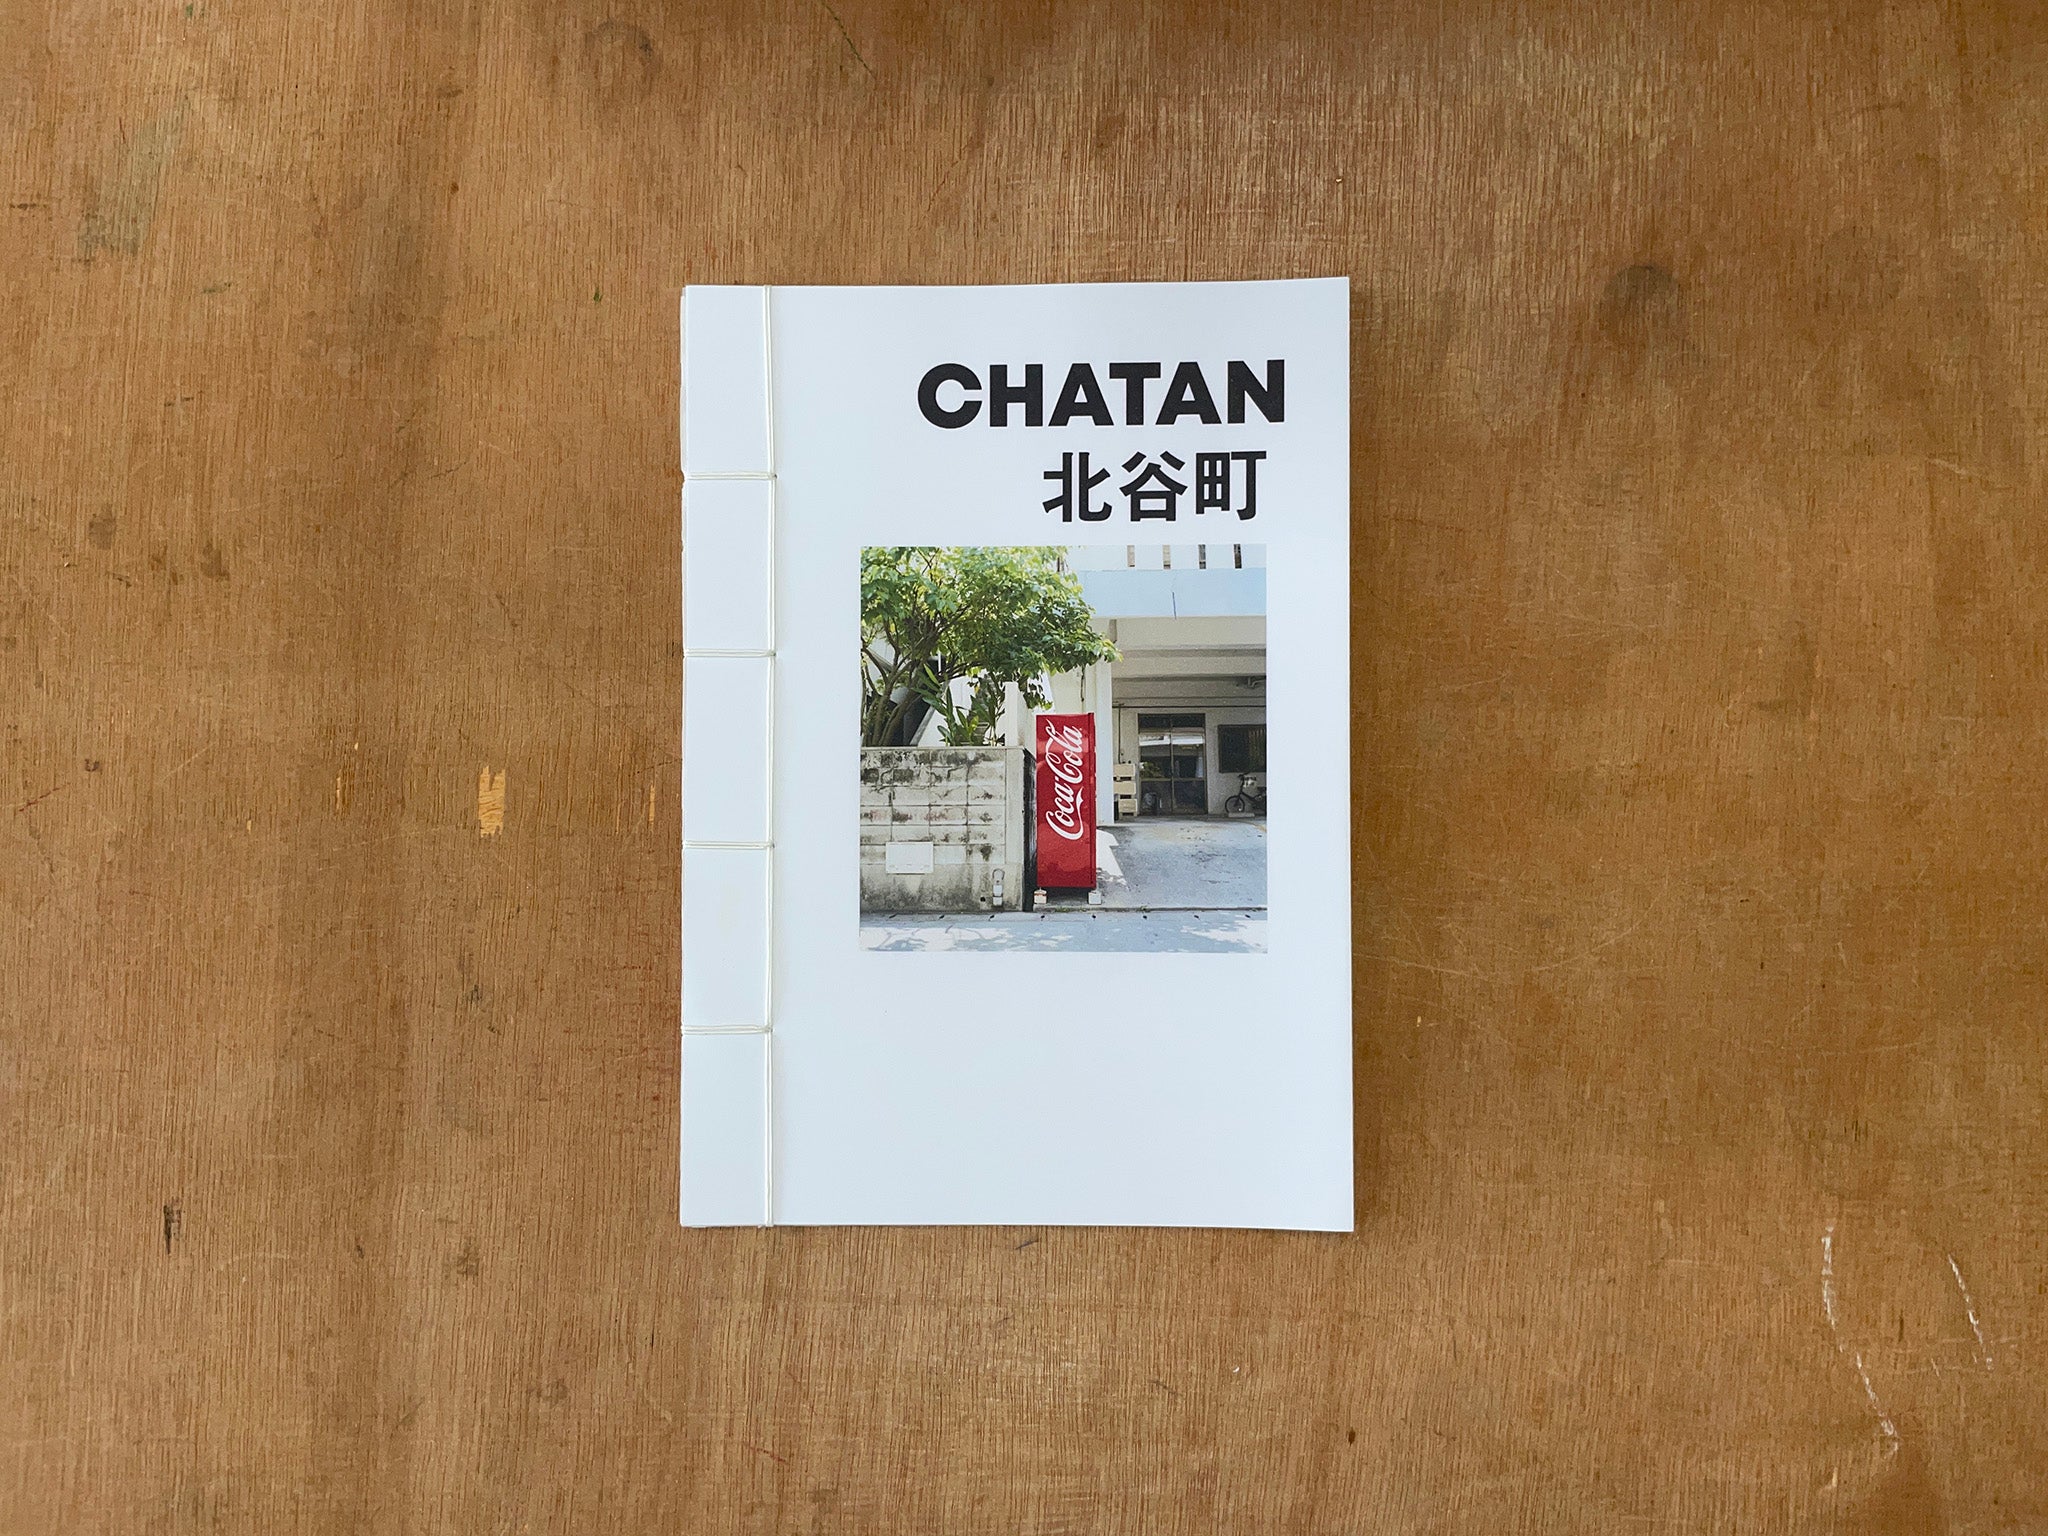 CHATAN by Hannah Killoh